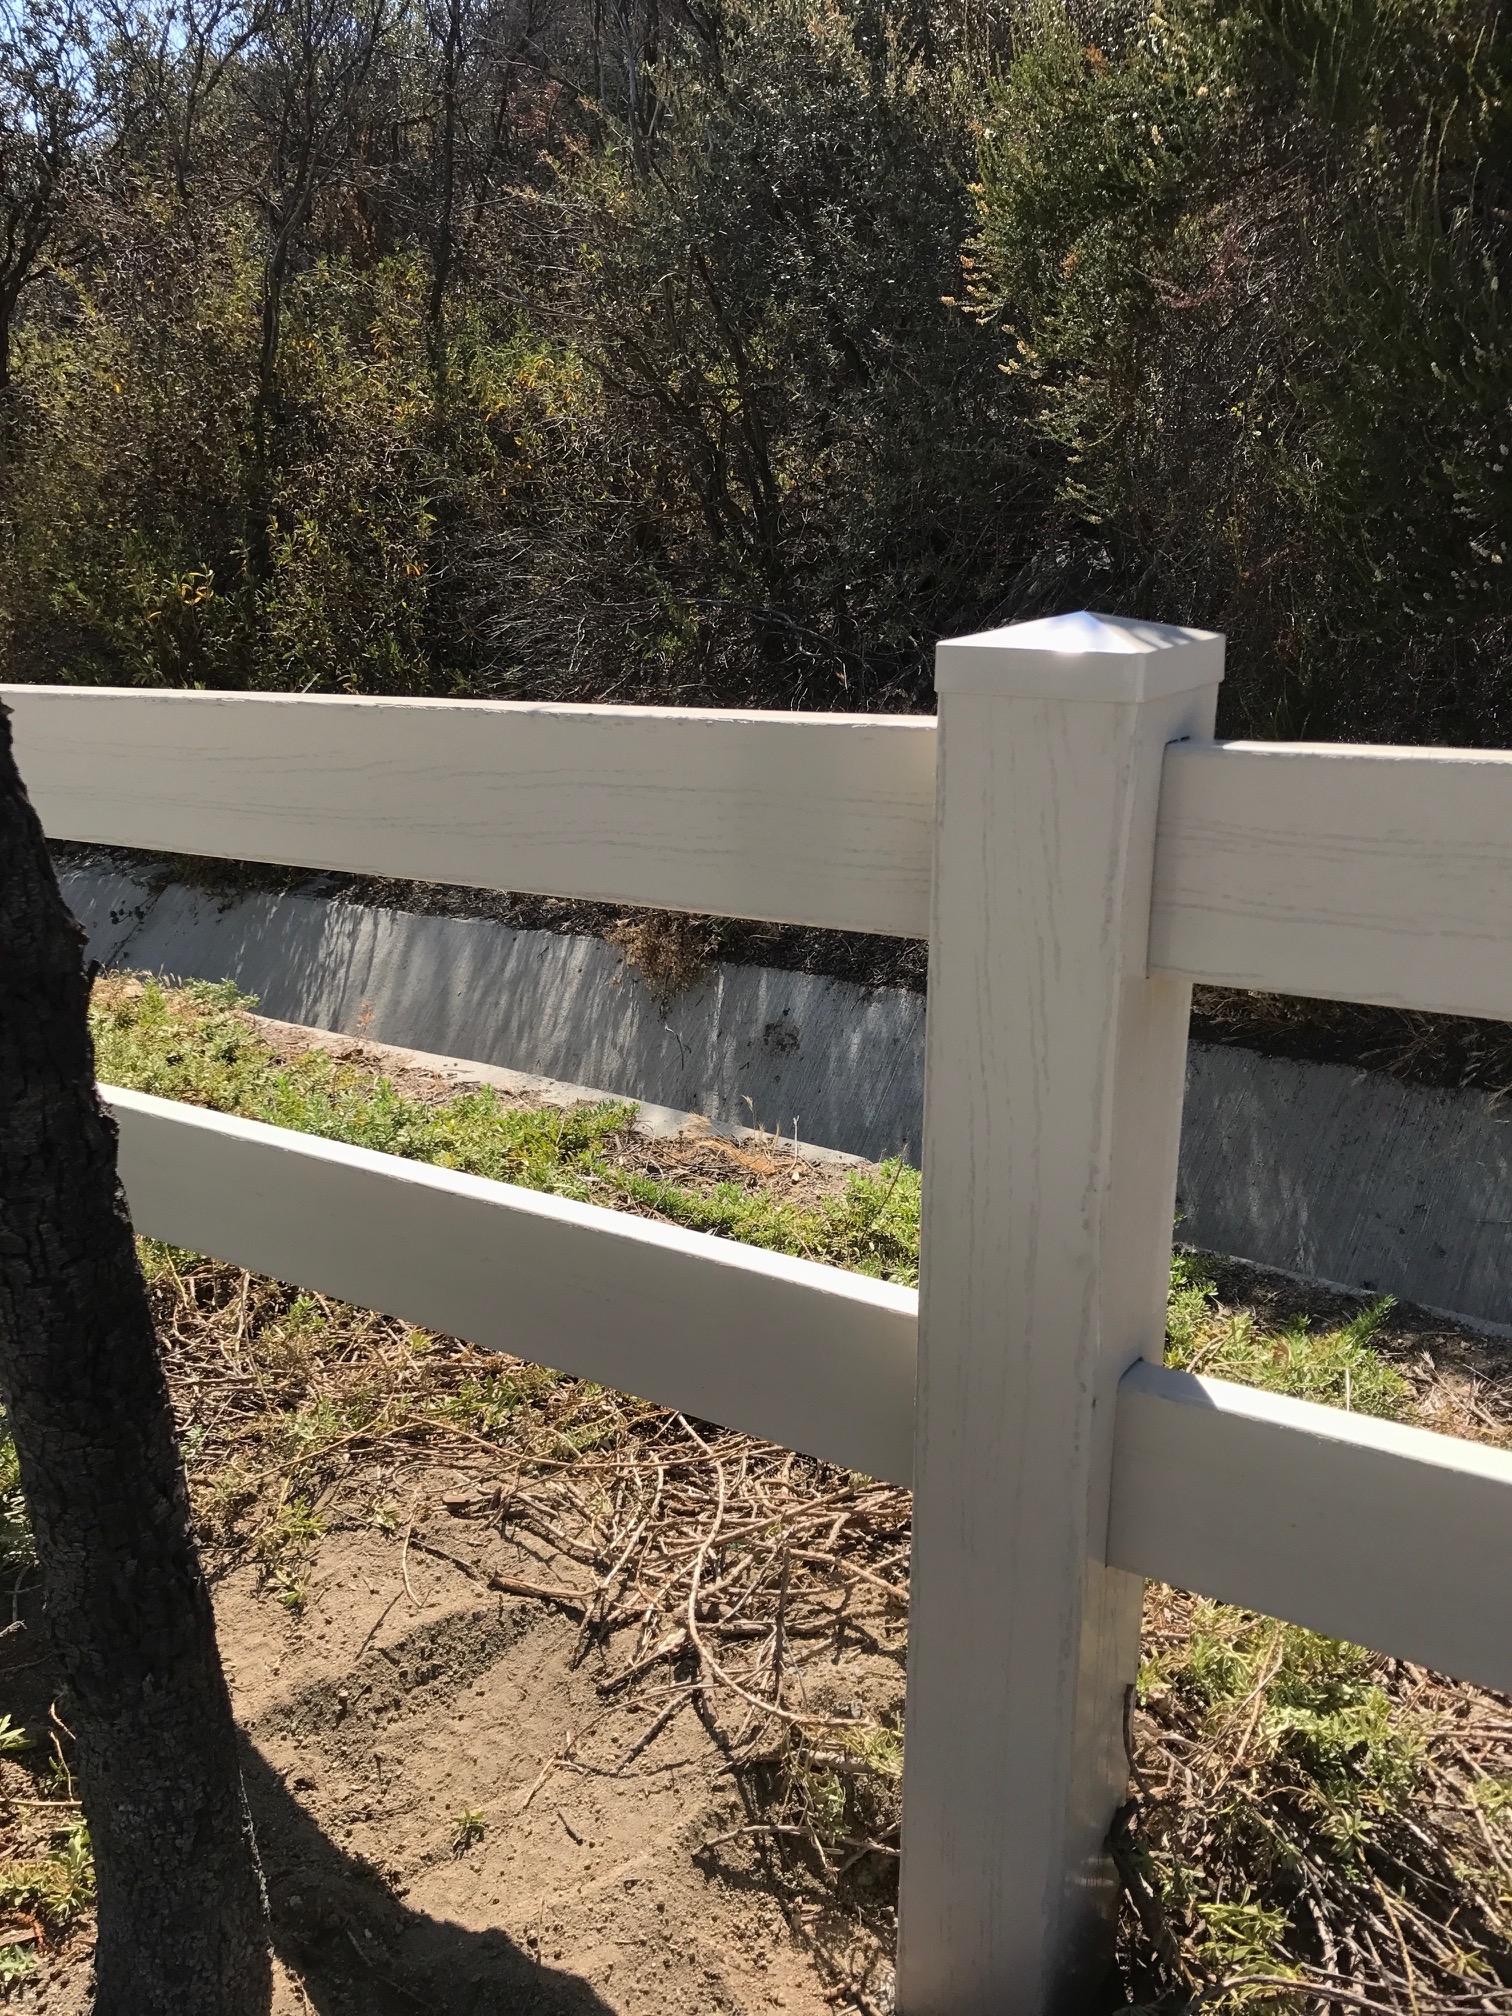 2 Rail Tan embossed Vinyl Fence installed by 3T Fence in Murrieta Ca.